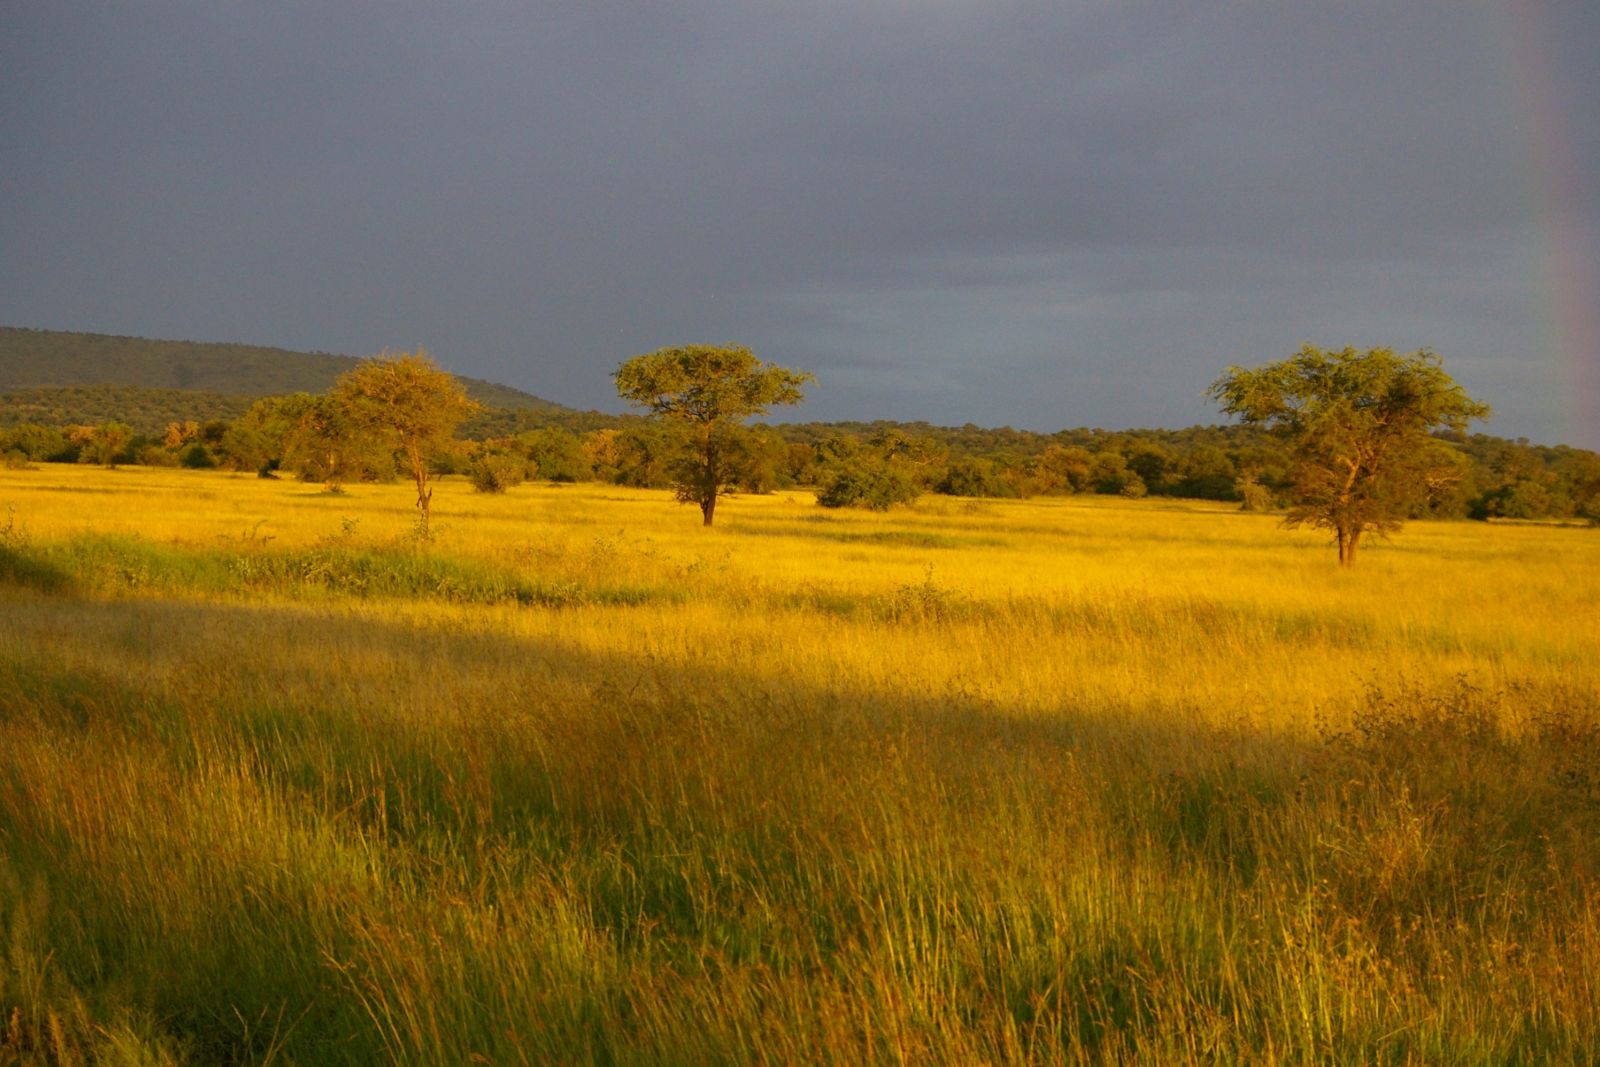 TANLTC_230519_1GVO_Savanne-Serengeti-NP.jpg